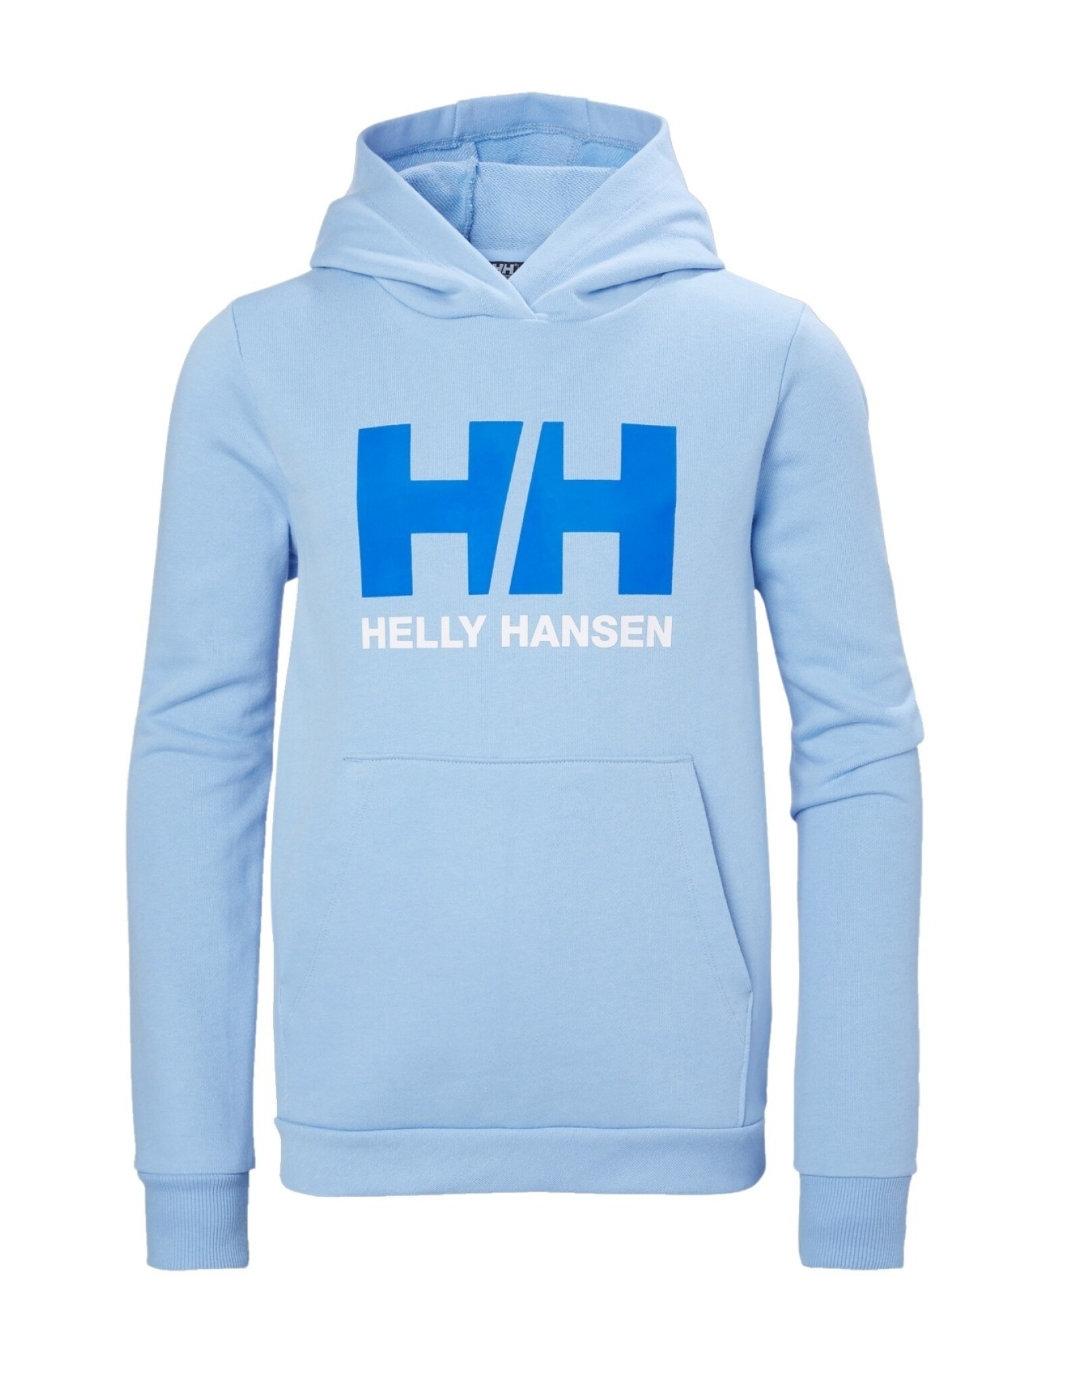 Sudadera Helly Hansen Kids Logo celeste con capucha unisex